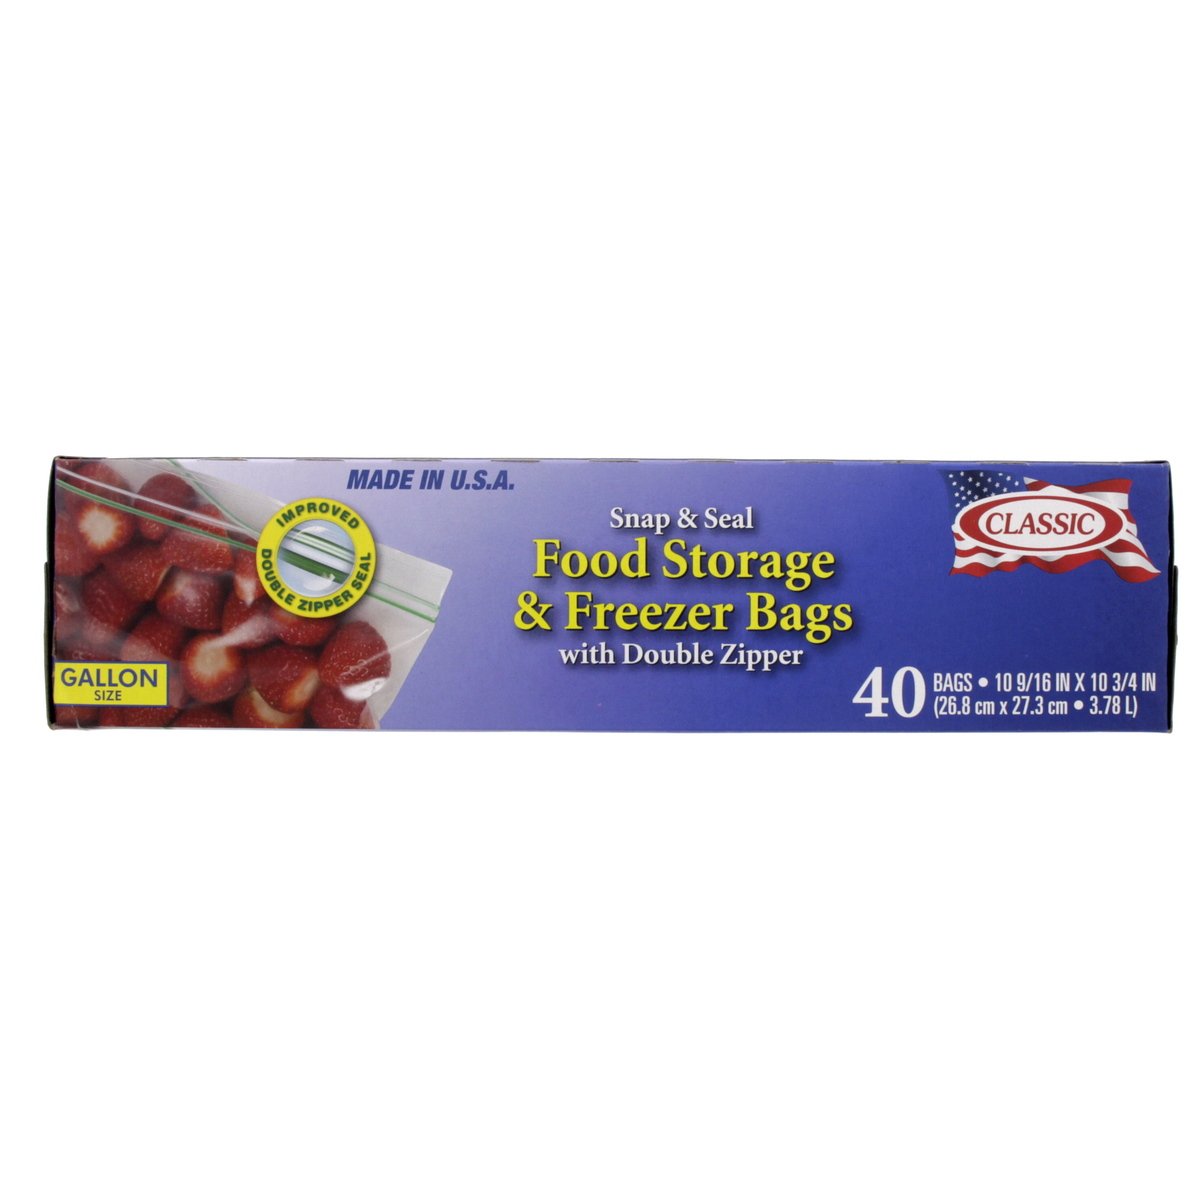 Classic Snap & Seal Food Storage & Freezer Bags 1 Gallon Size 26.8cm x 27.3cm 40pcs